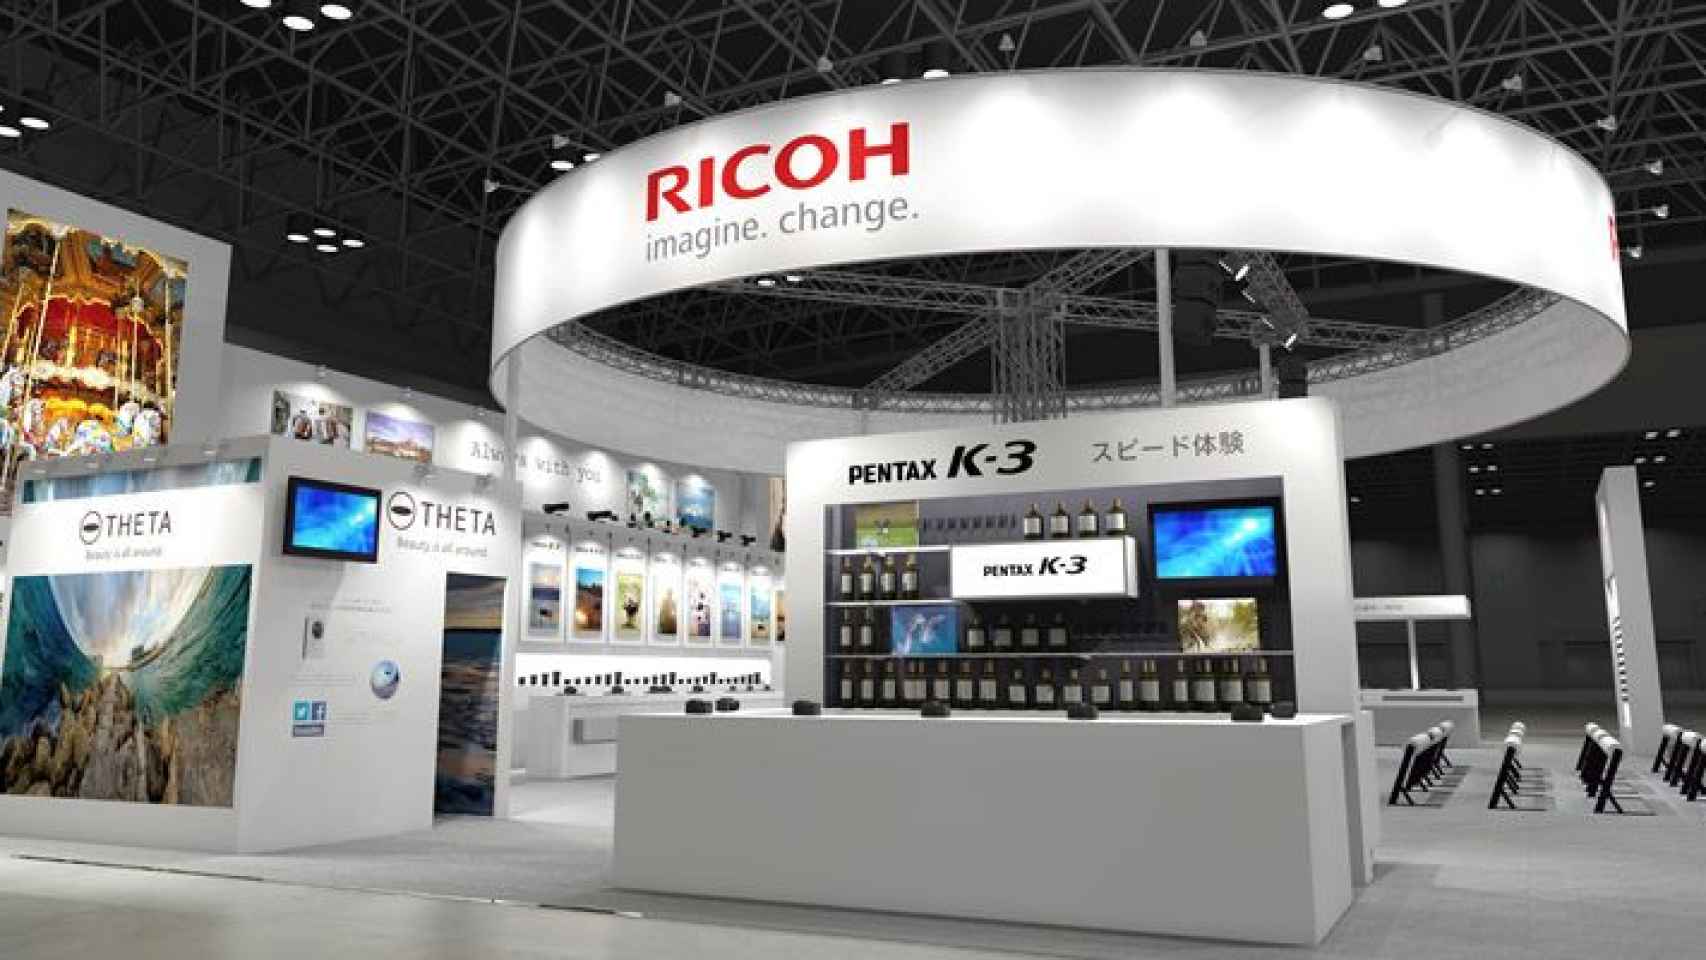 Un stand de la compañía Ricoh España